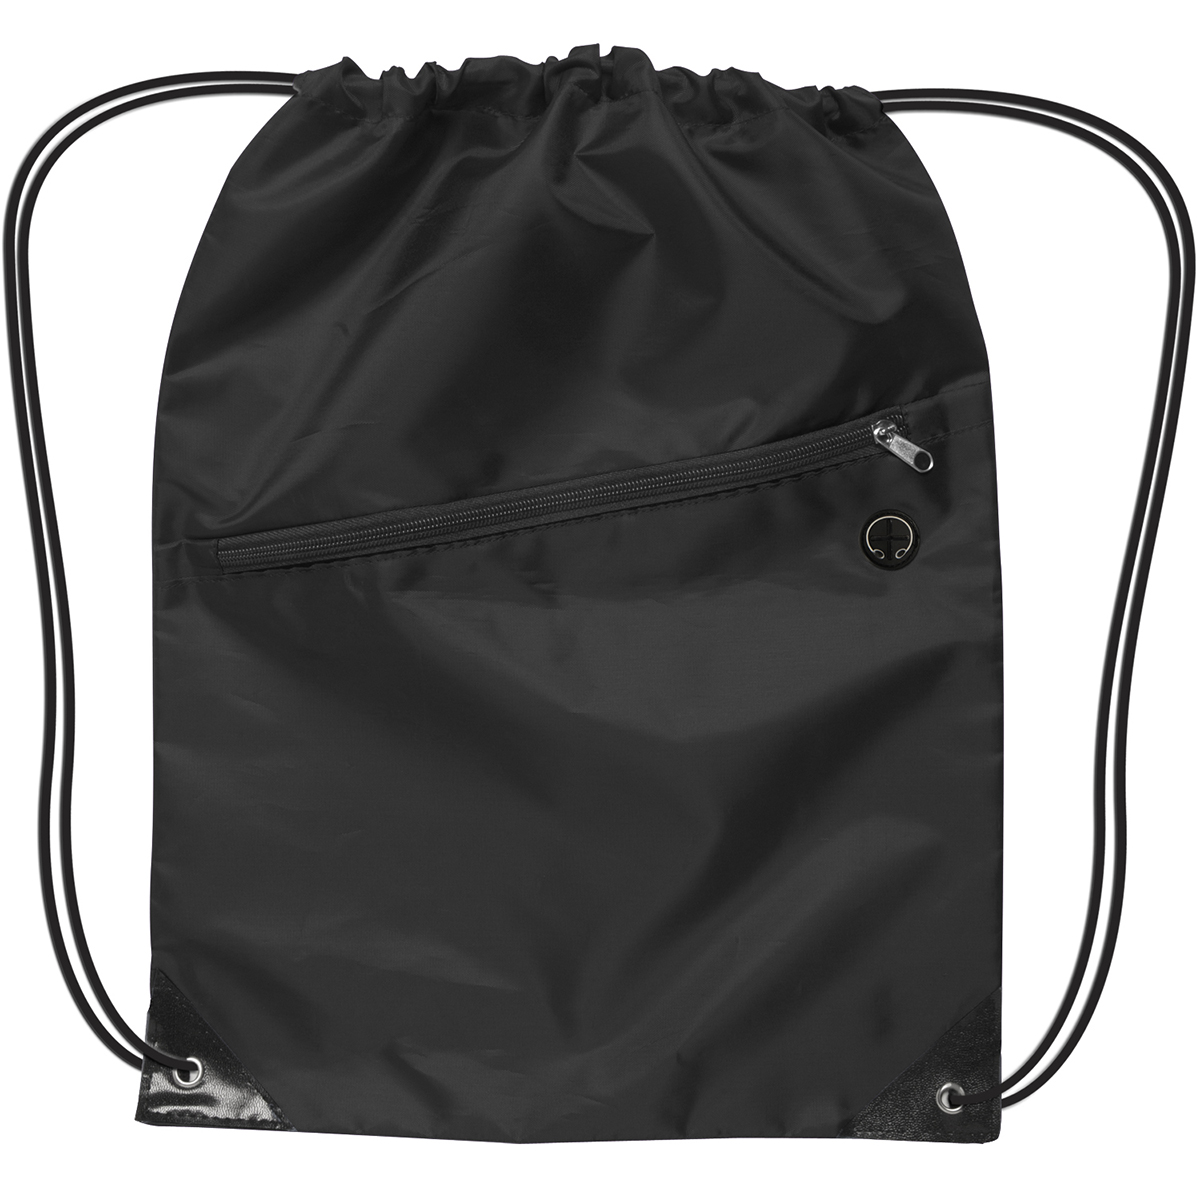 Black Drawstring Backpack w/ Zipper